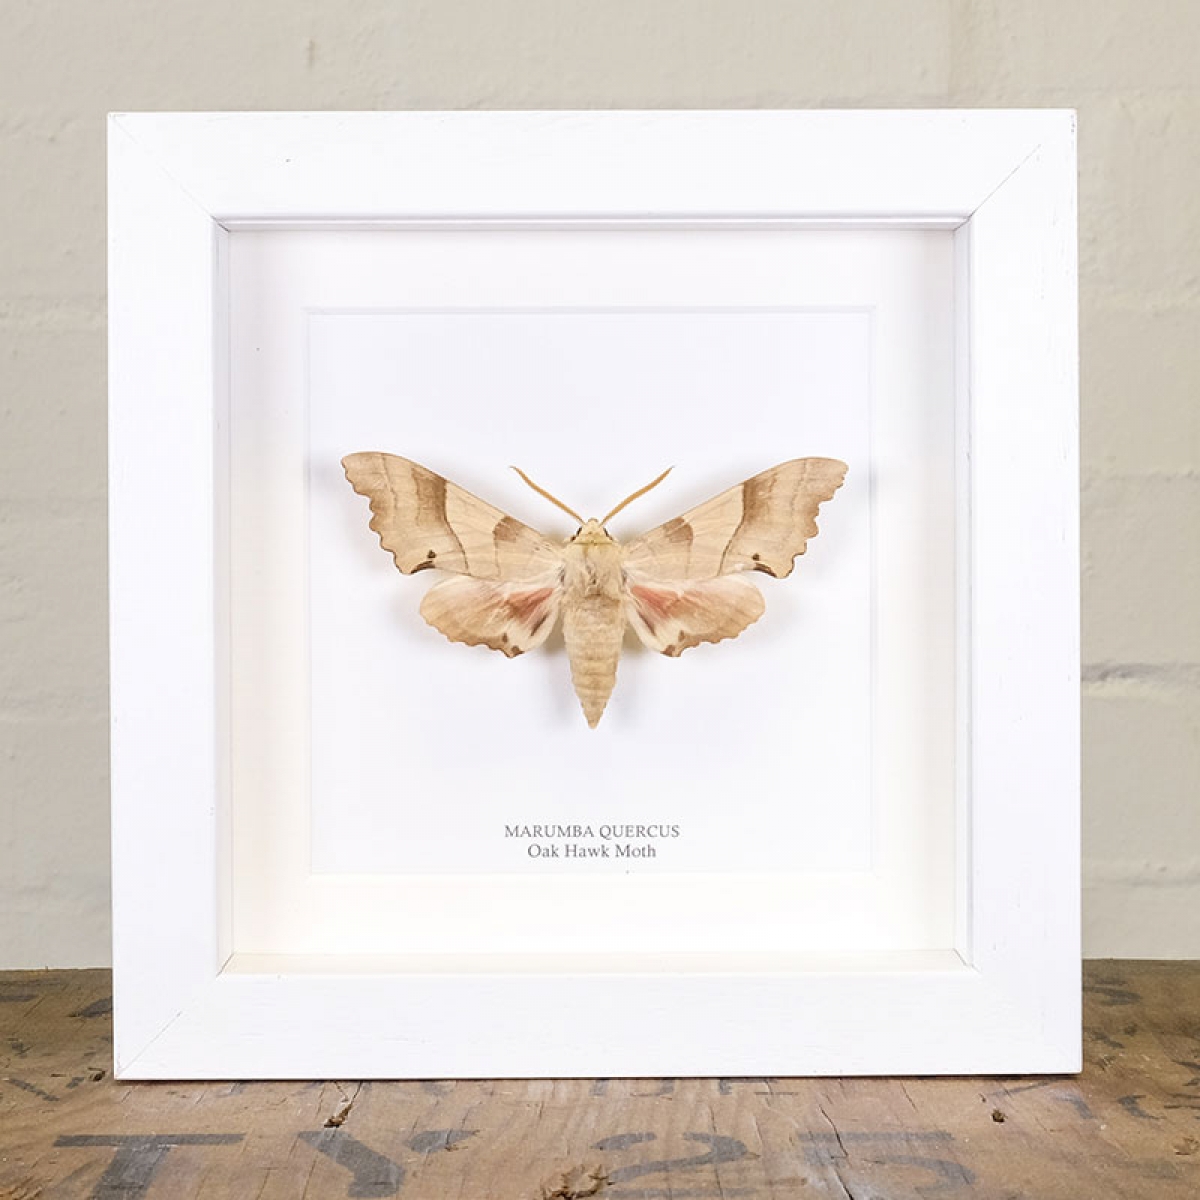 Oak Hawk Moth in Box Frame (Marumba quercus)